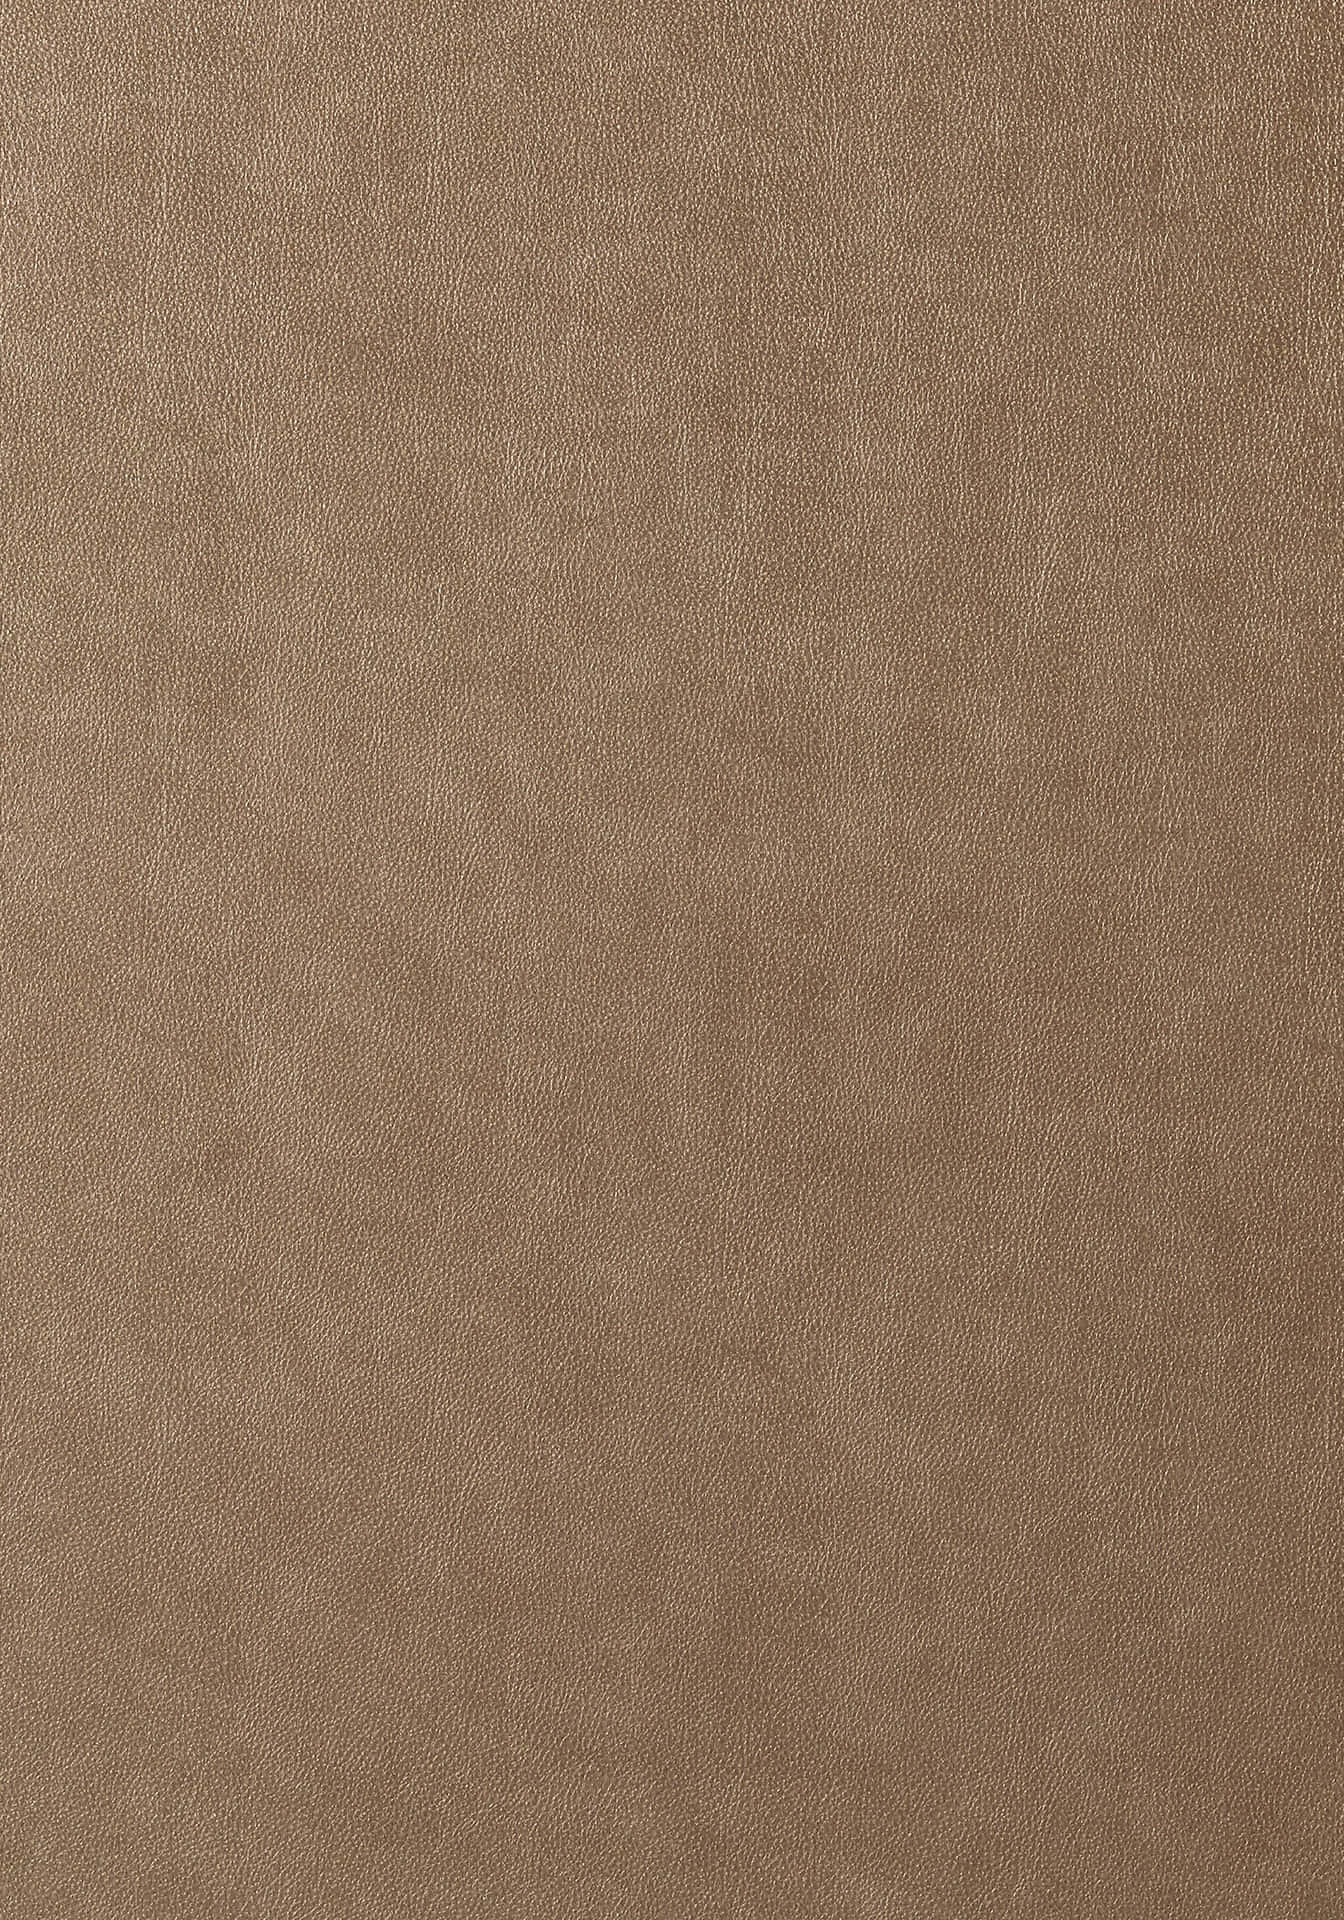 Brown Leather Texture Portrait Picture